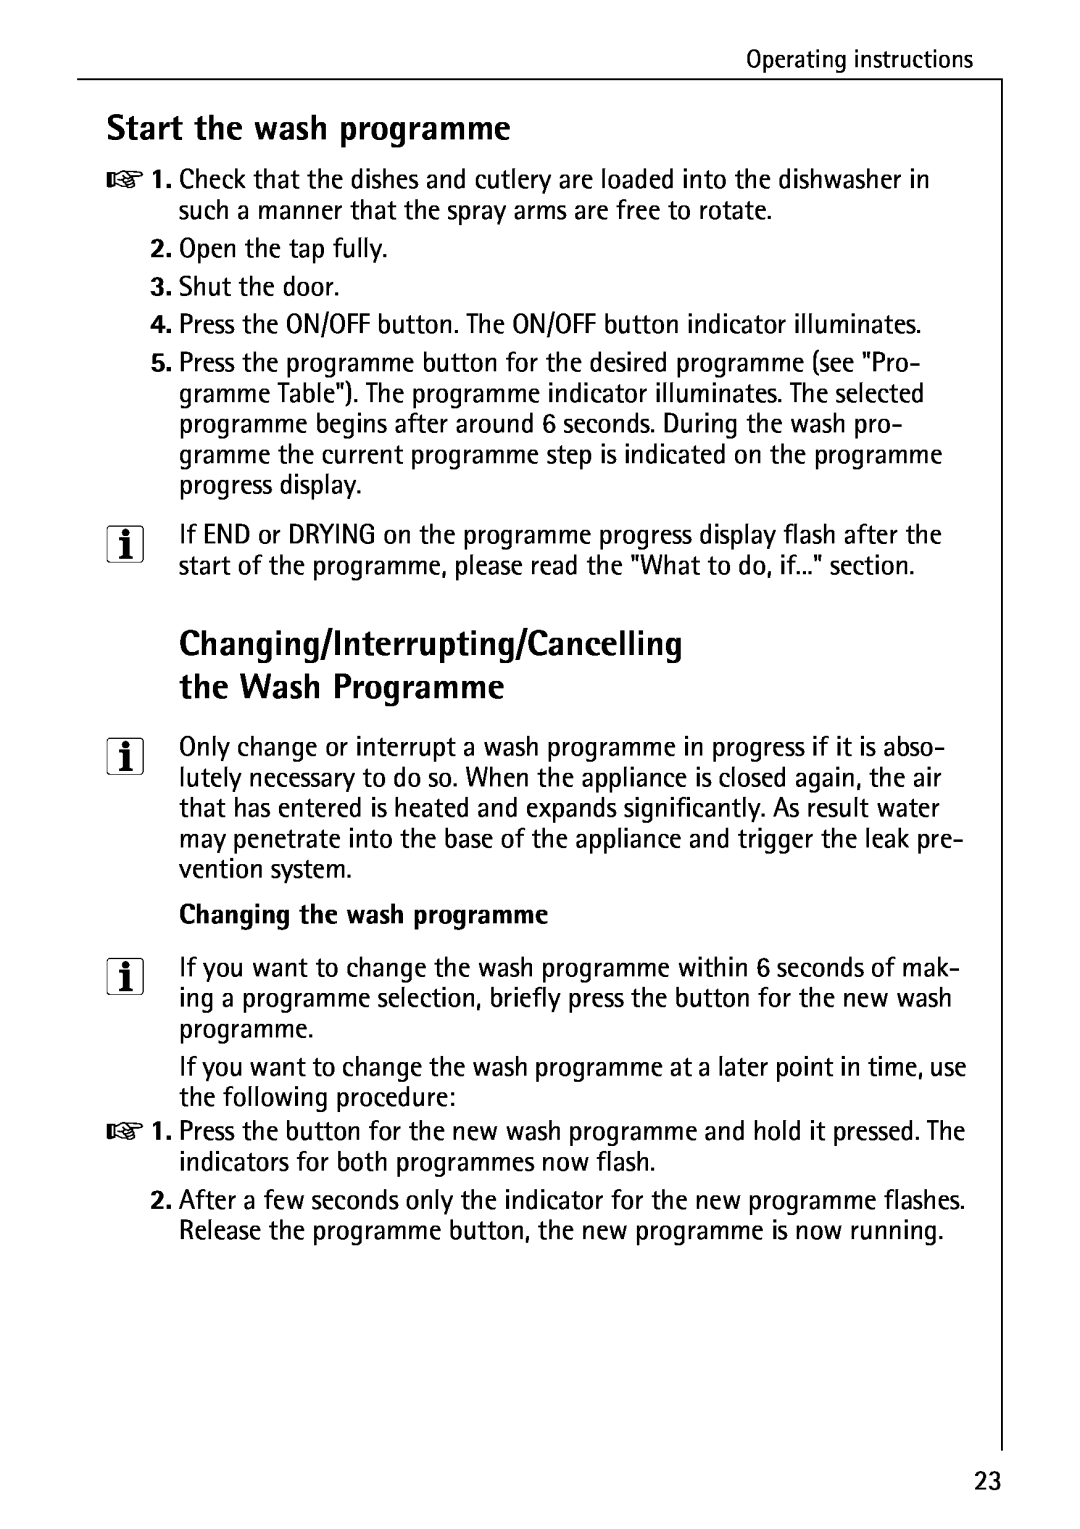 AEG 4270 I Start the wash programme, Changing/Interrupting/Cancelling, the Wash Programme, Changing the wash programme 